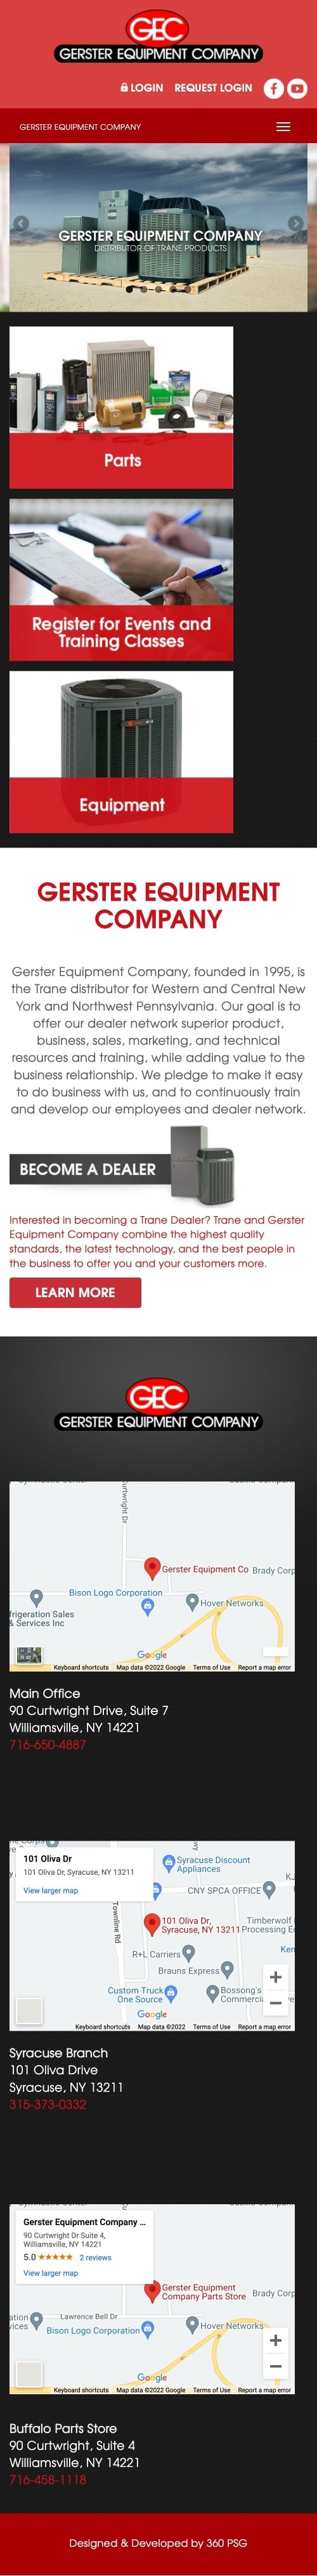 Gerster Equipment Company Website - Mobile